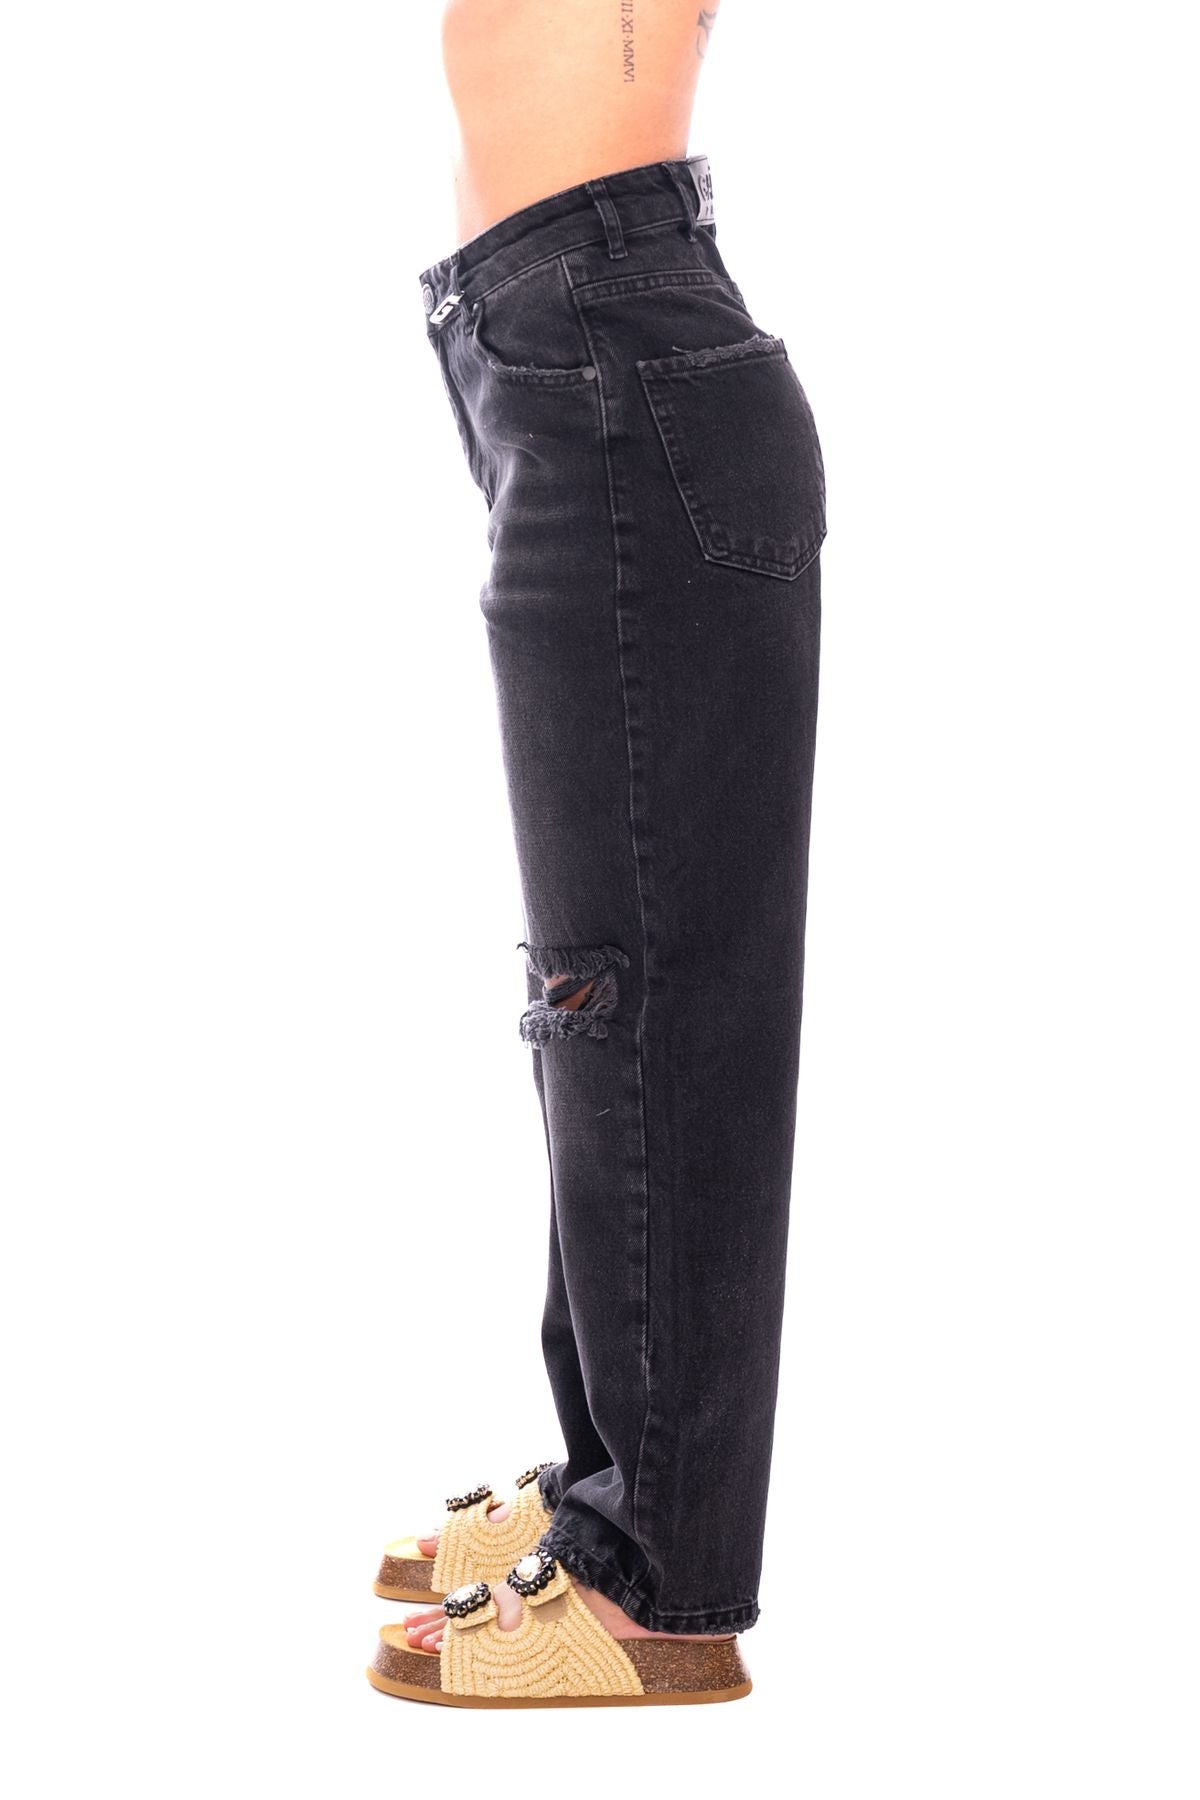 gbdp17107 - jeans - GAELLE PARIS